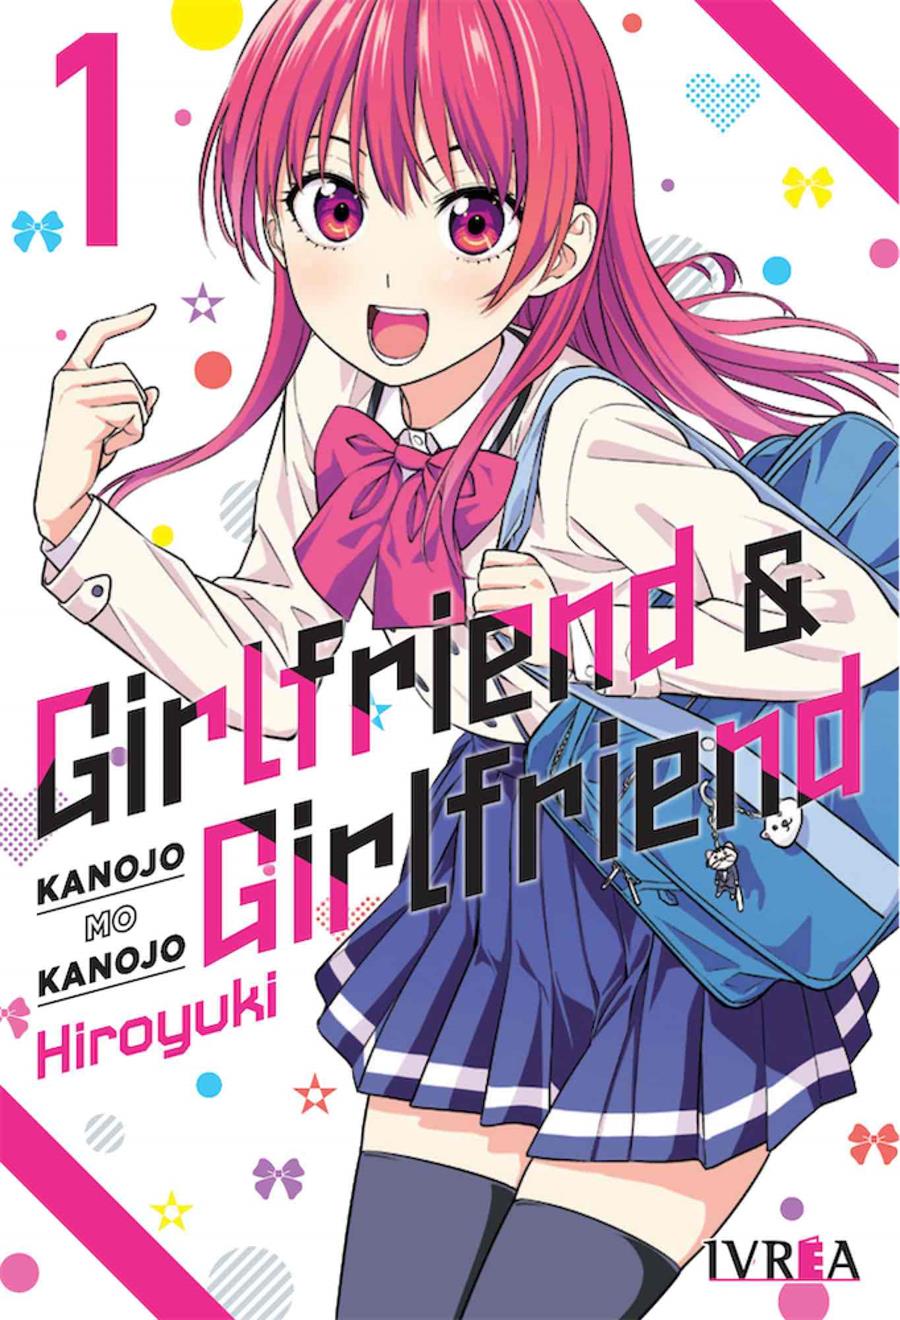 Girlfriend y girlfriend Vol.1 | N0722-IVR05 | Kanojo Mo Kanojo | Terra de Còmic - Tu tienda de cómics online especializada en cómics, manga y merchandising